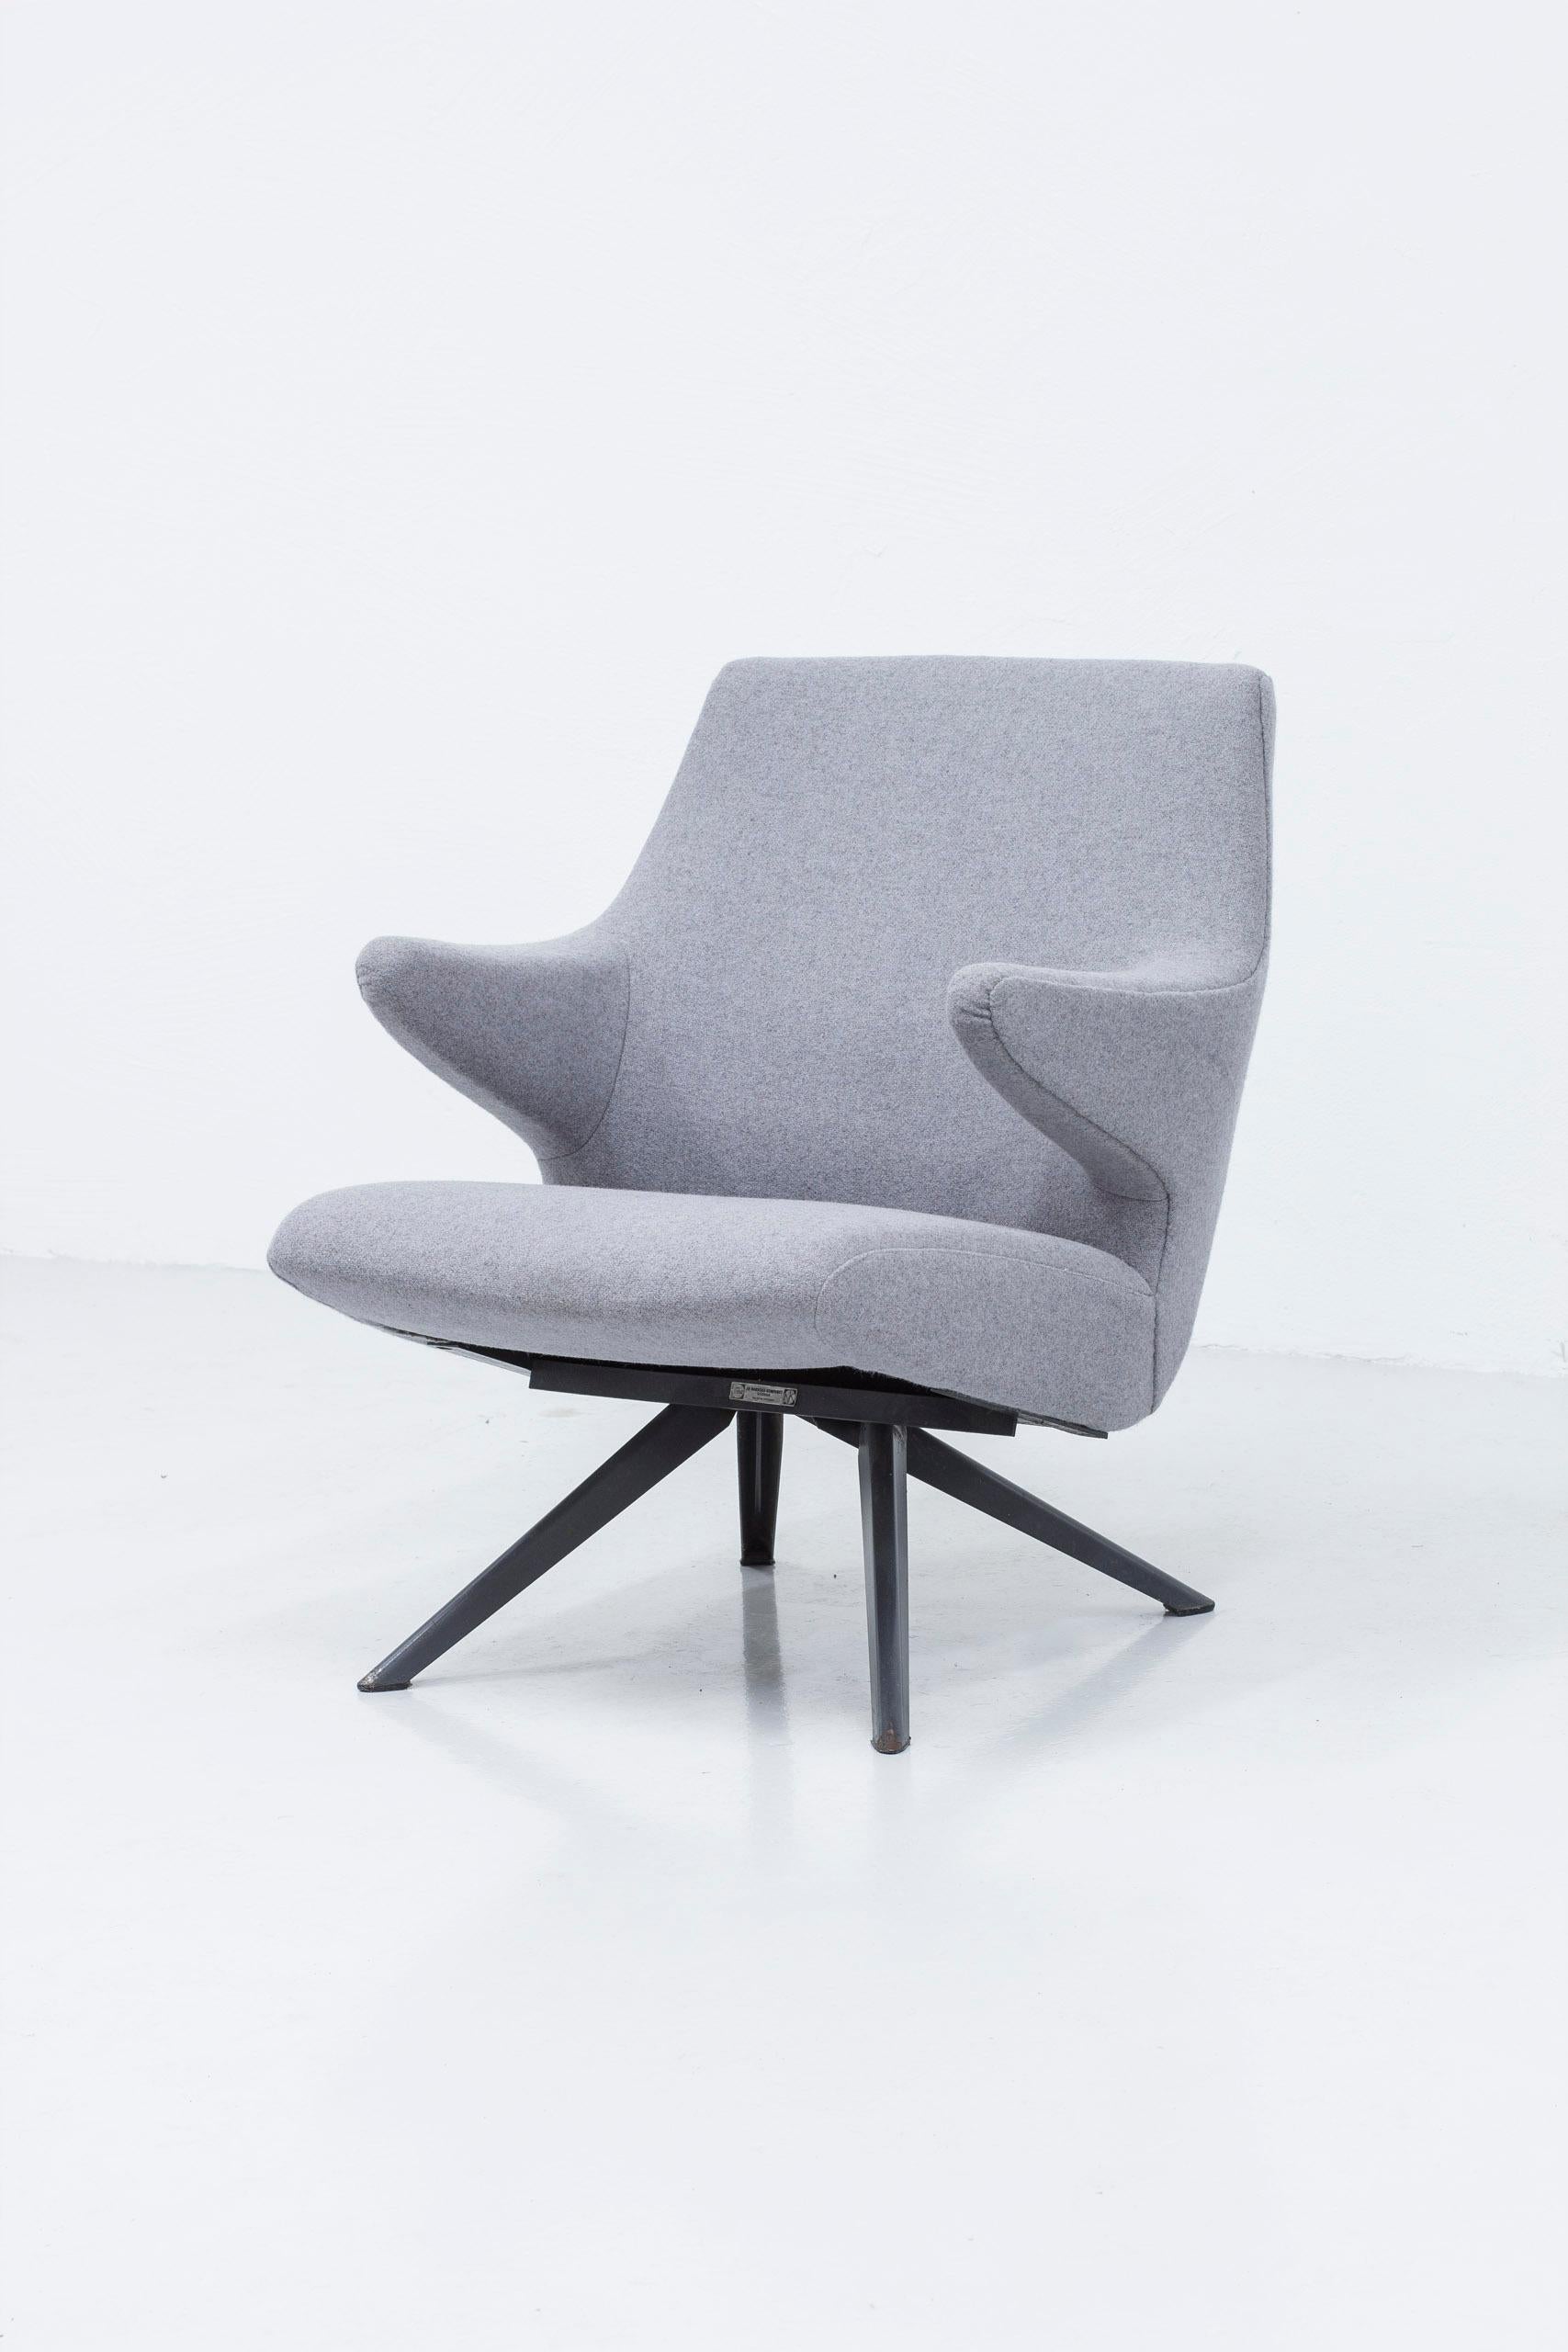 Organic Lounge Chair by Bengt Ruda, Nordiska Kompaniet, Sweden, Ca 1955 5